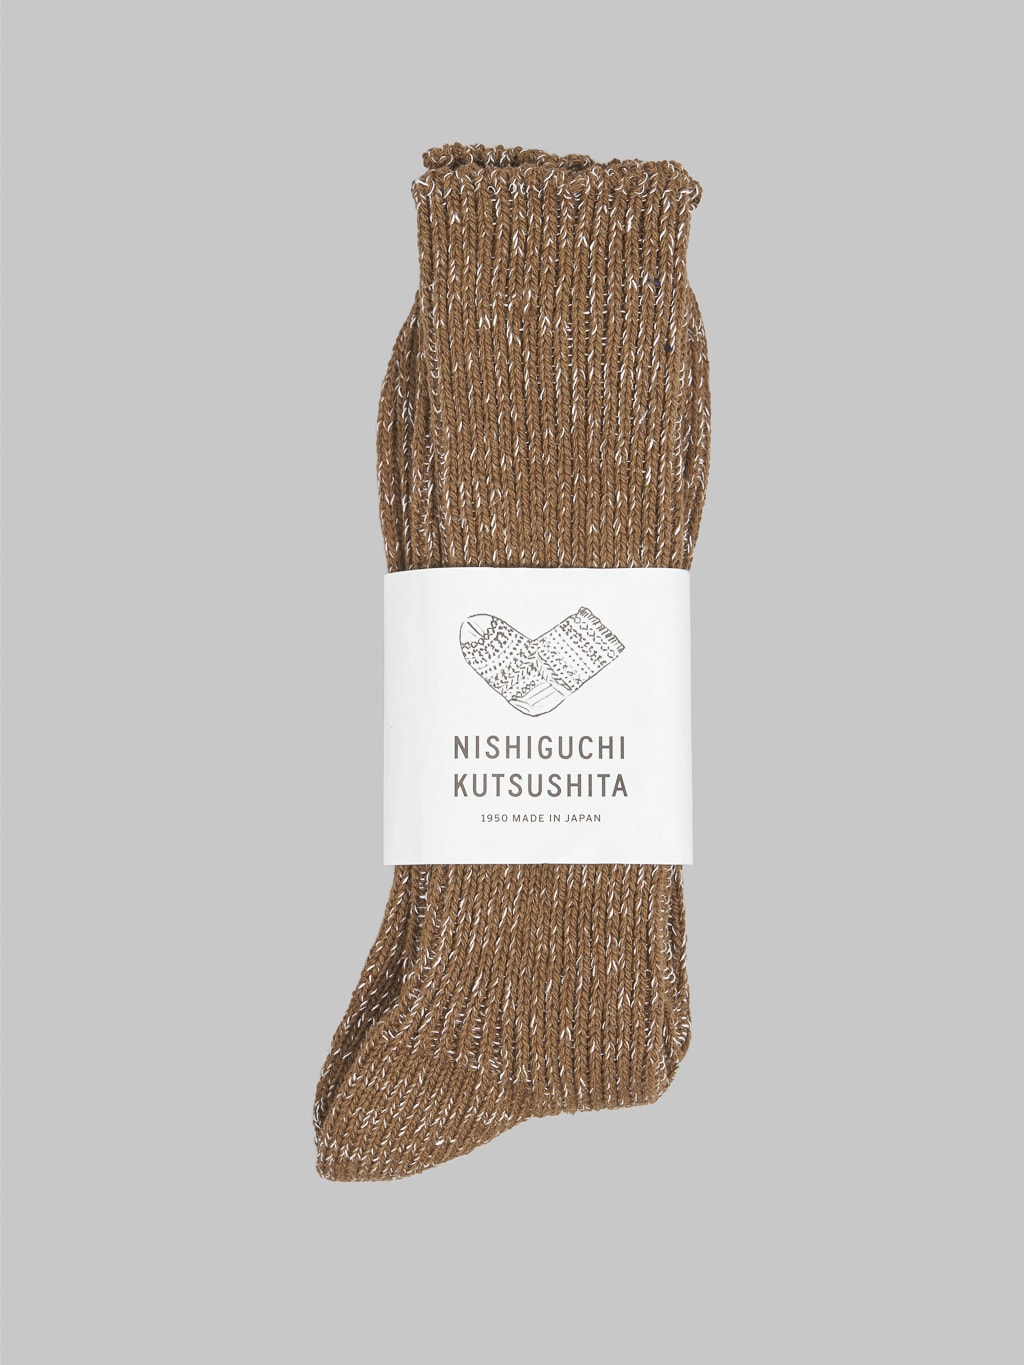  Nishiguchi Kutsushita Hemp Cotton Socks Khaki Japan Made